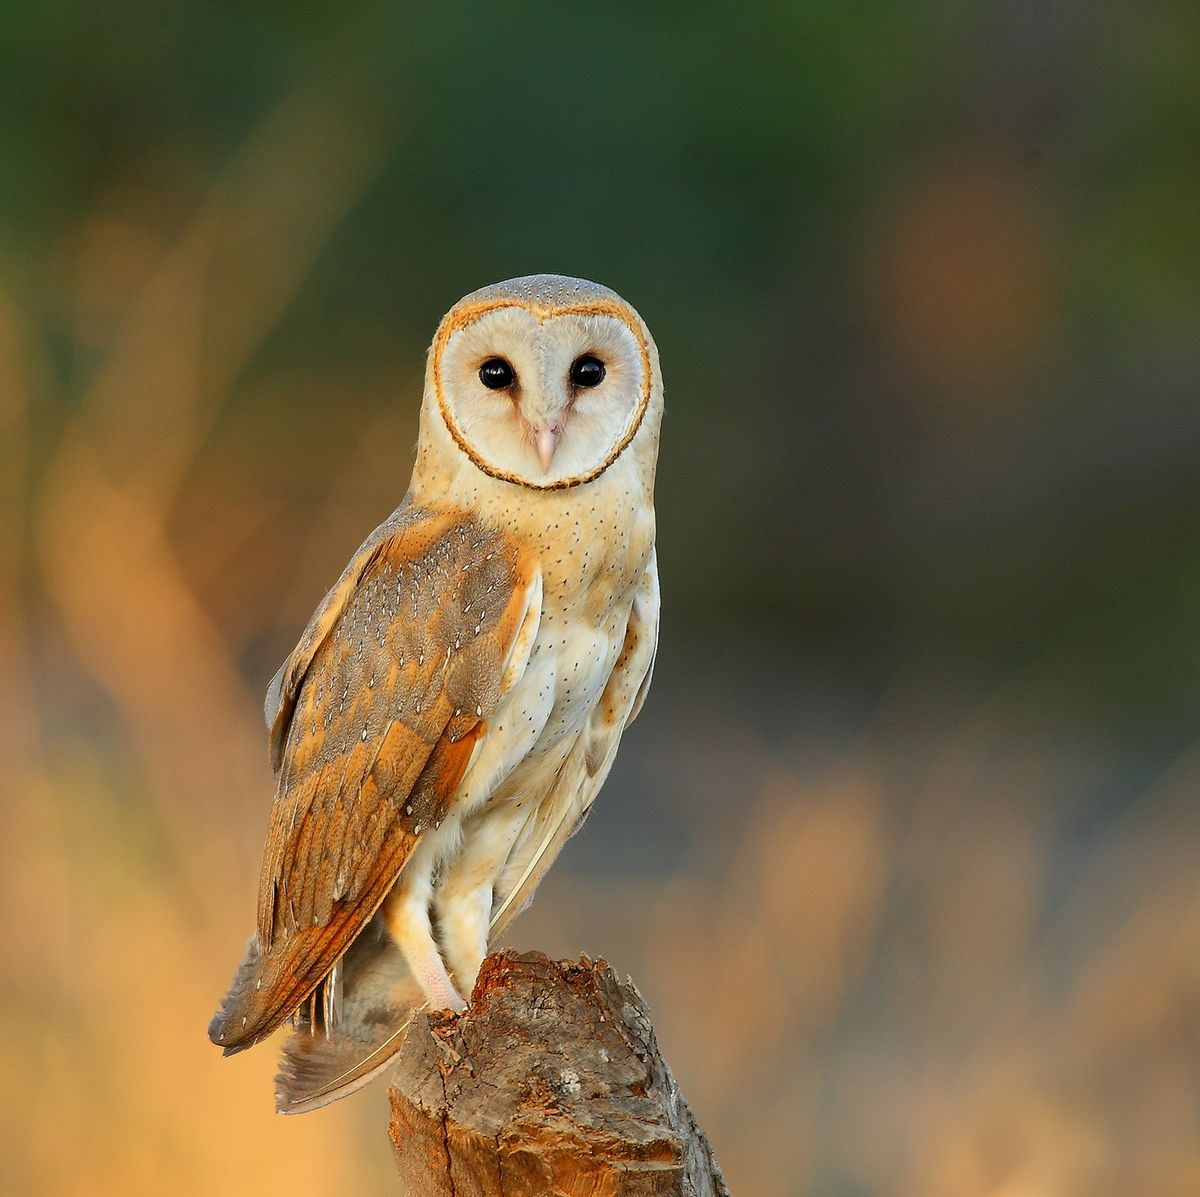 How To Spot A Barn Owl – Live Webcam